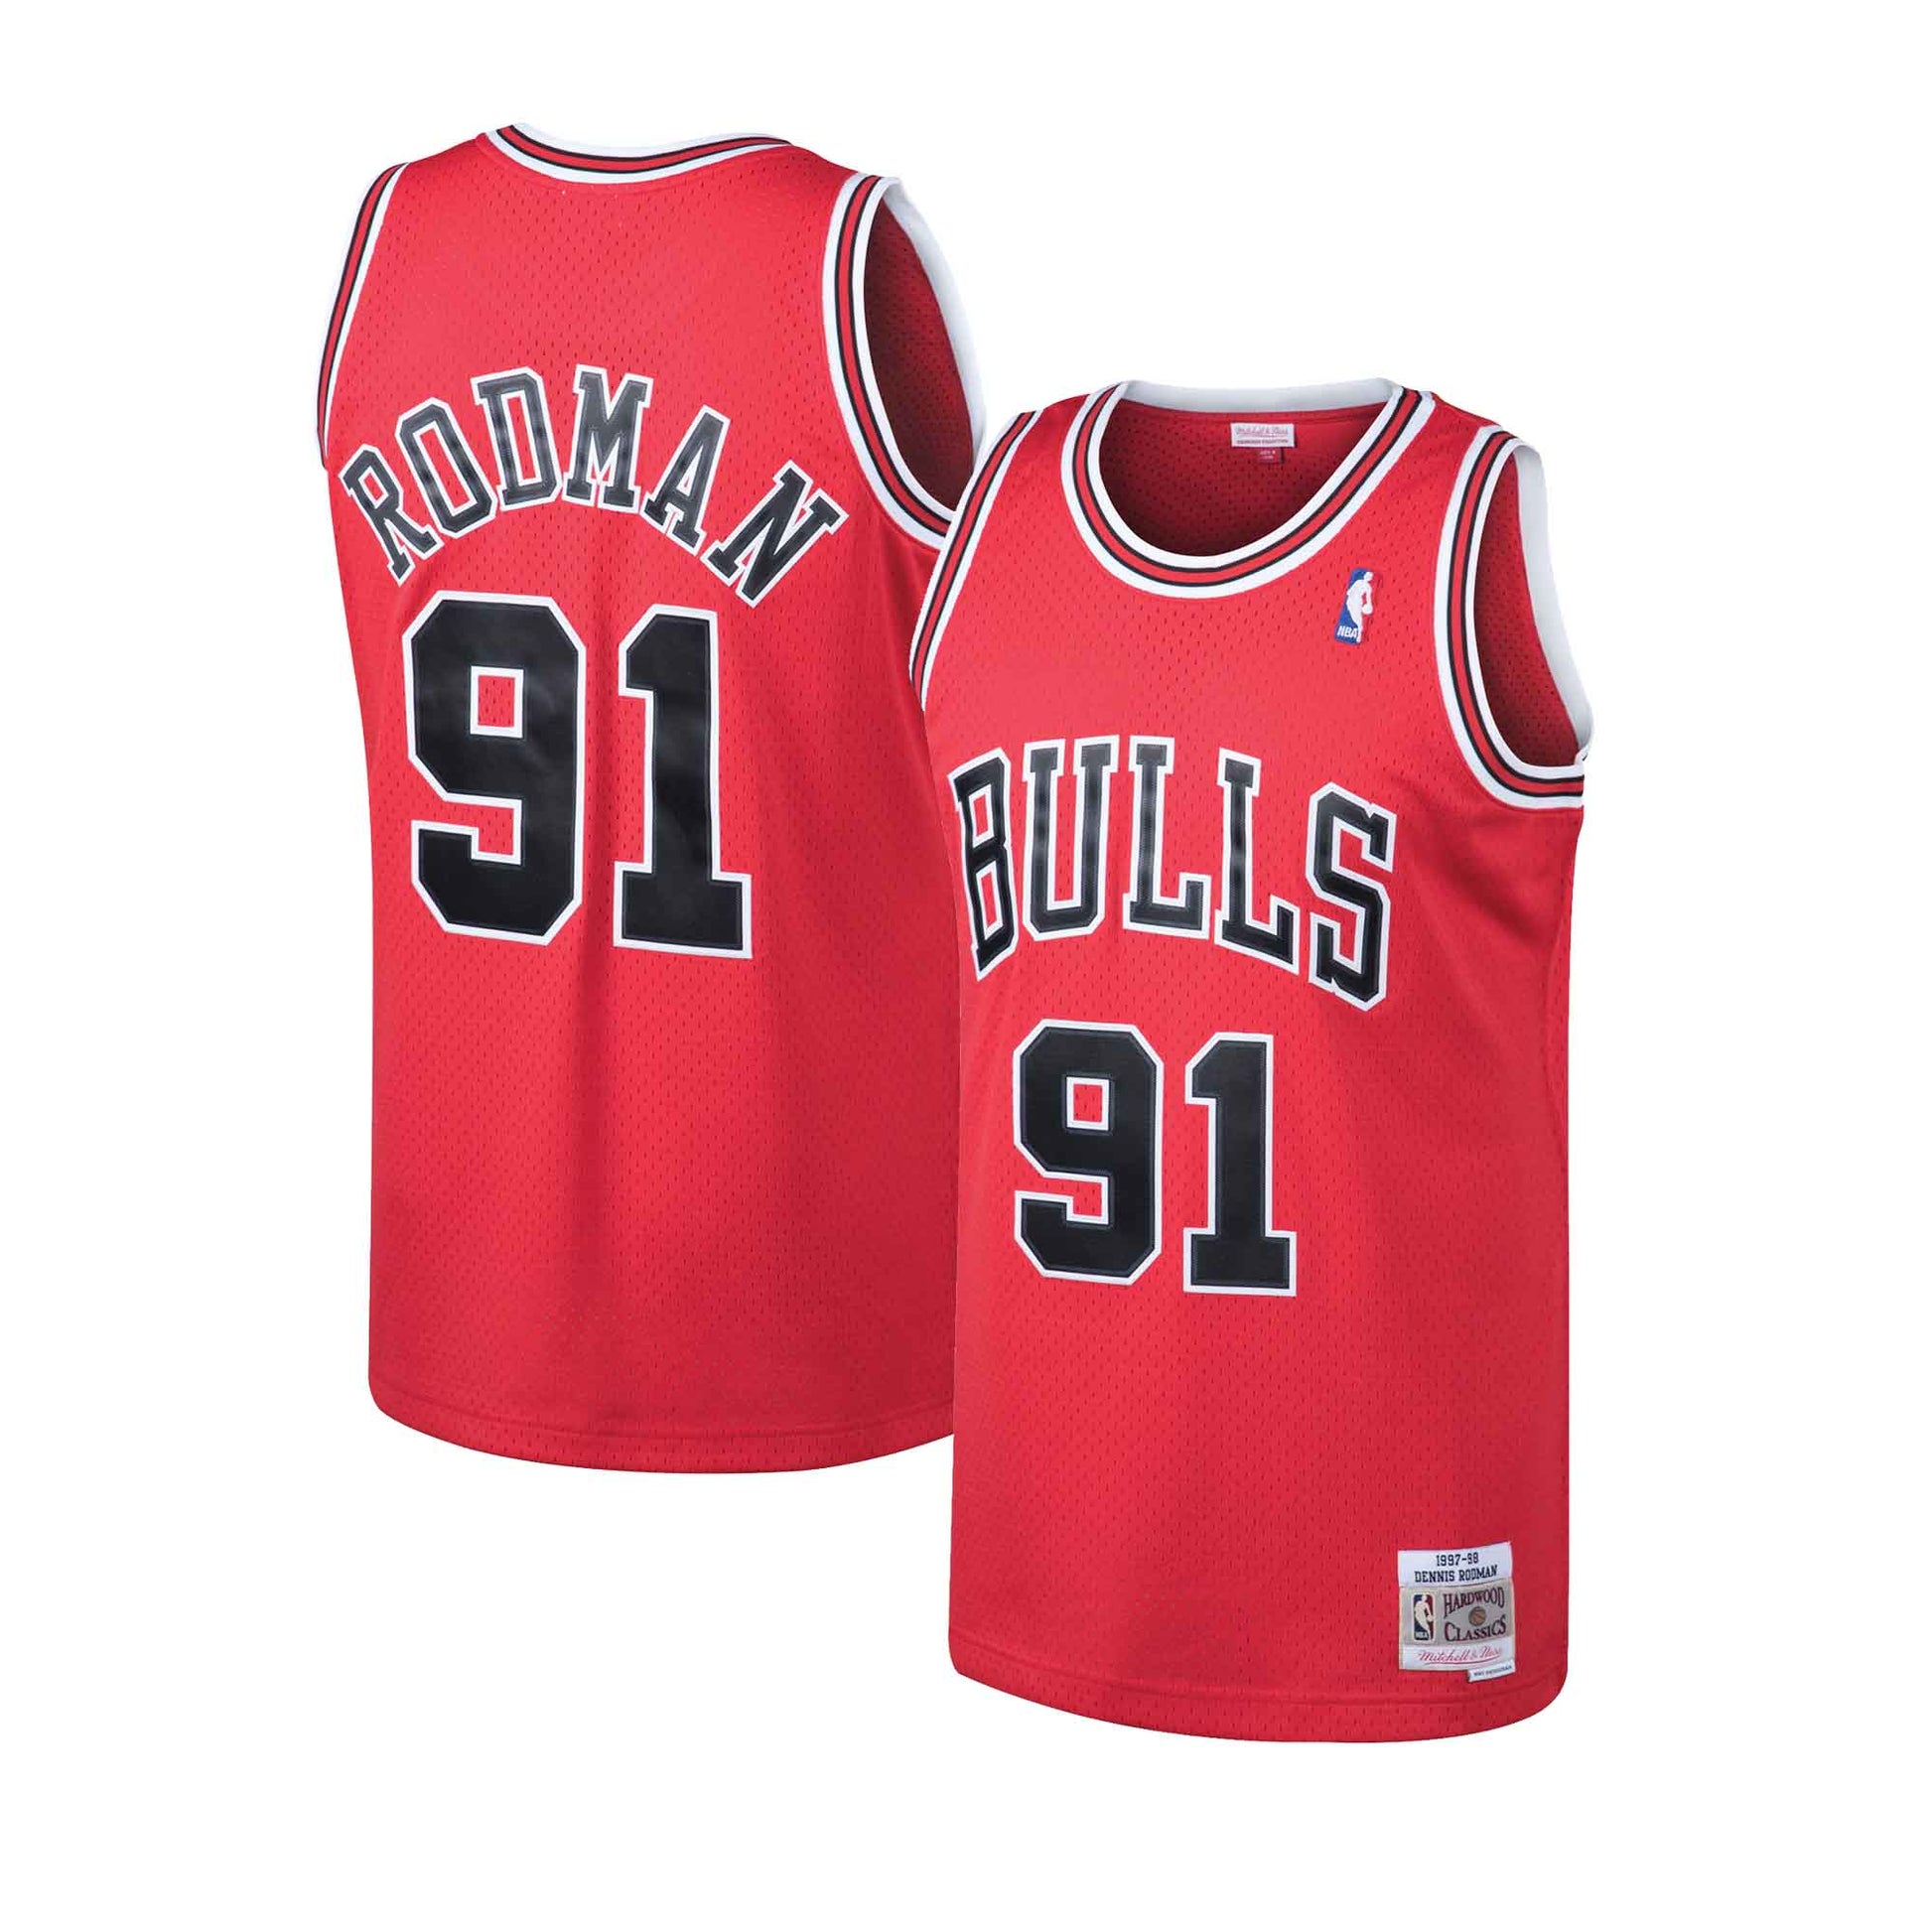 Womens 75th Anniversary Rose Gold Swingman Dennis Rodman Chicago Bulls  1997-98 Jersey